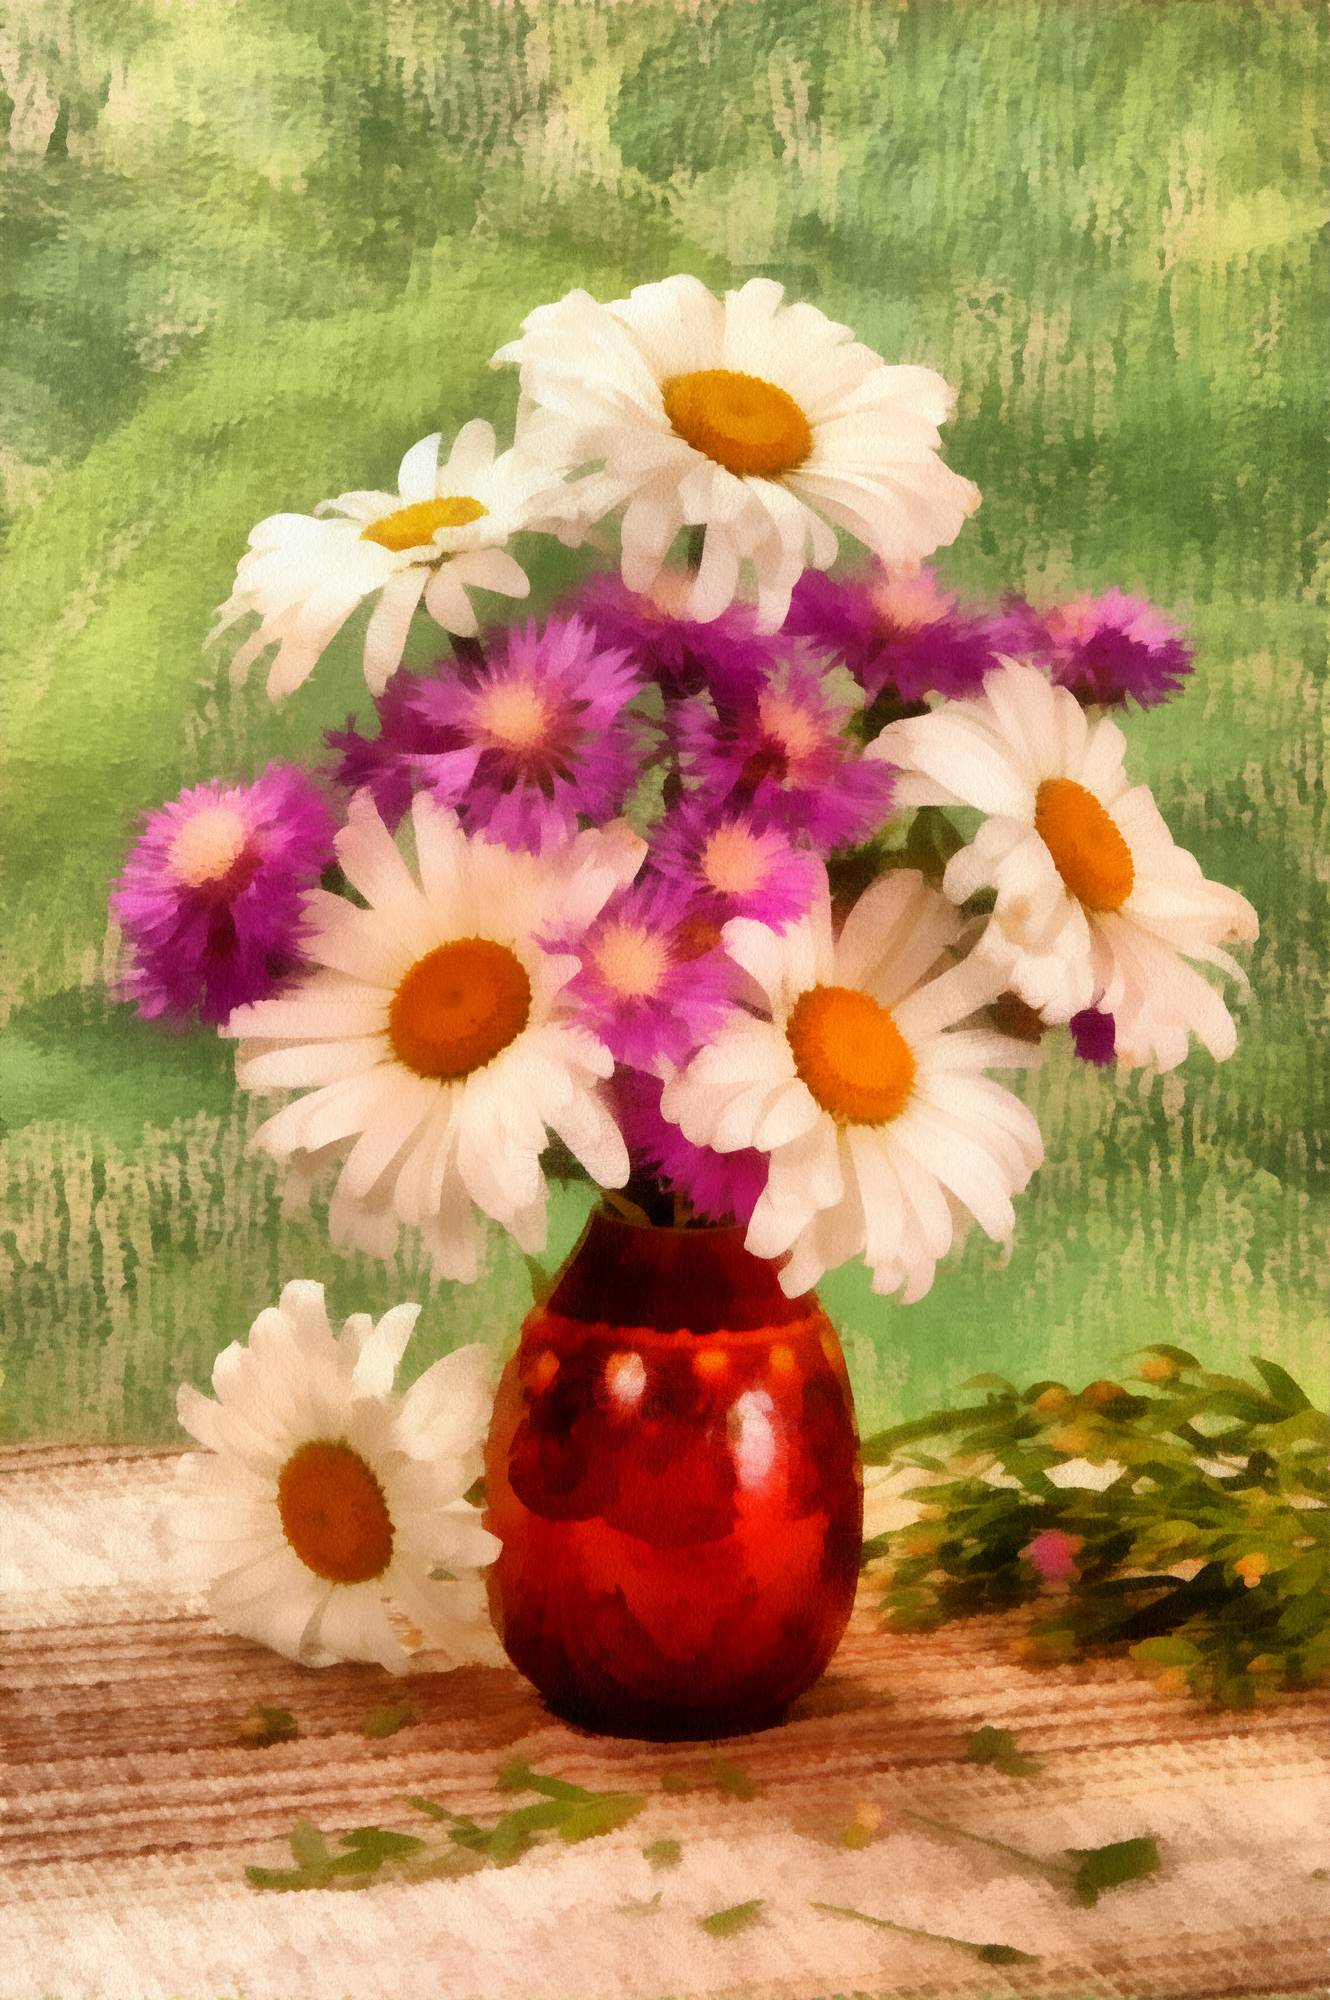 Flower-Vase-27 – Watercolor Flower Painting For Sale – Digital Painting Printed On Canvas